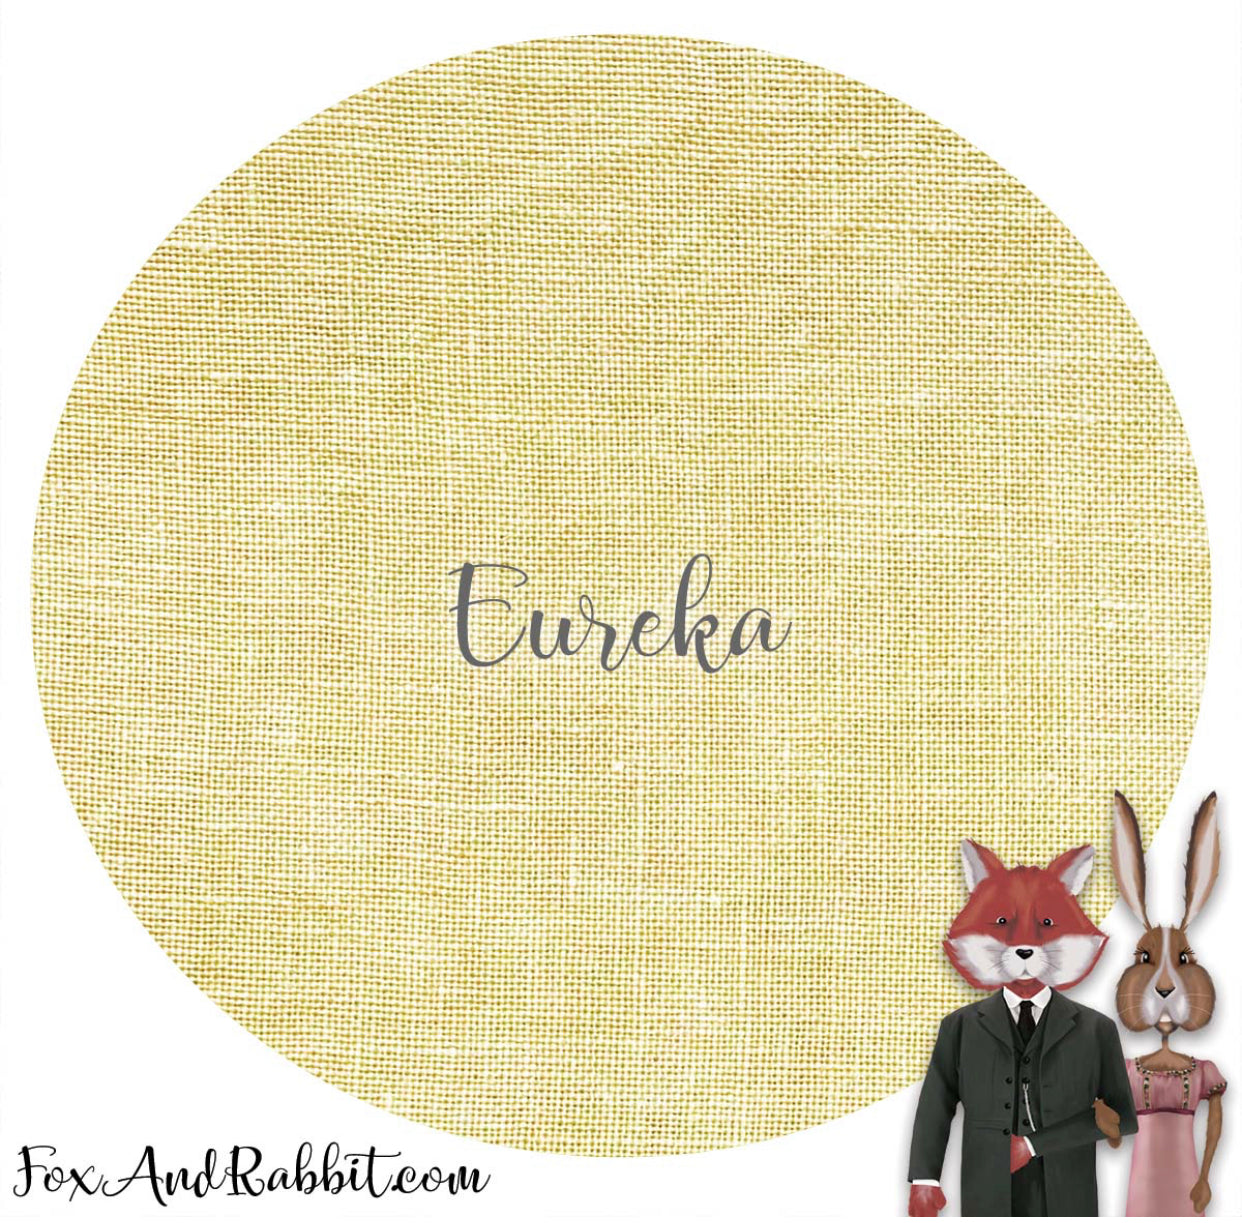 32 Count Eureka Fox and Rabbit